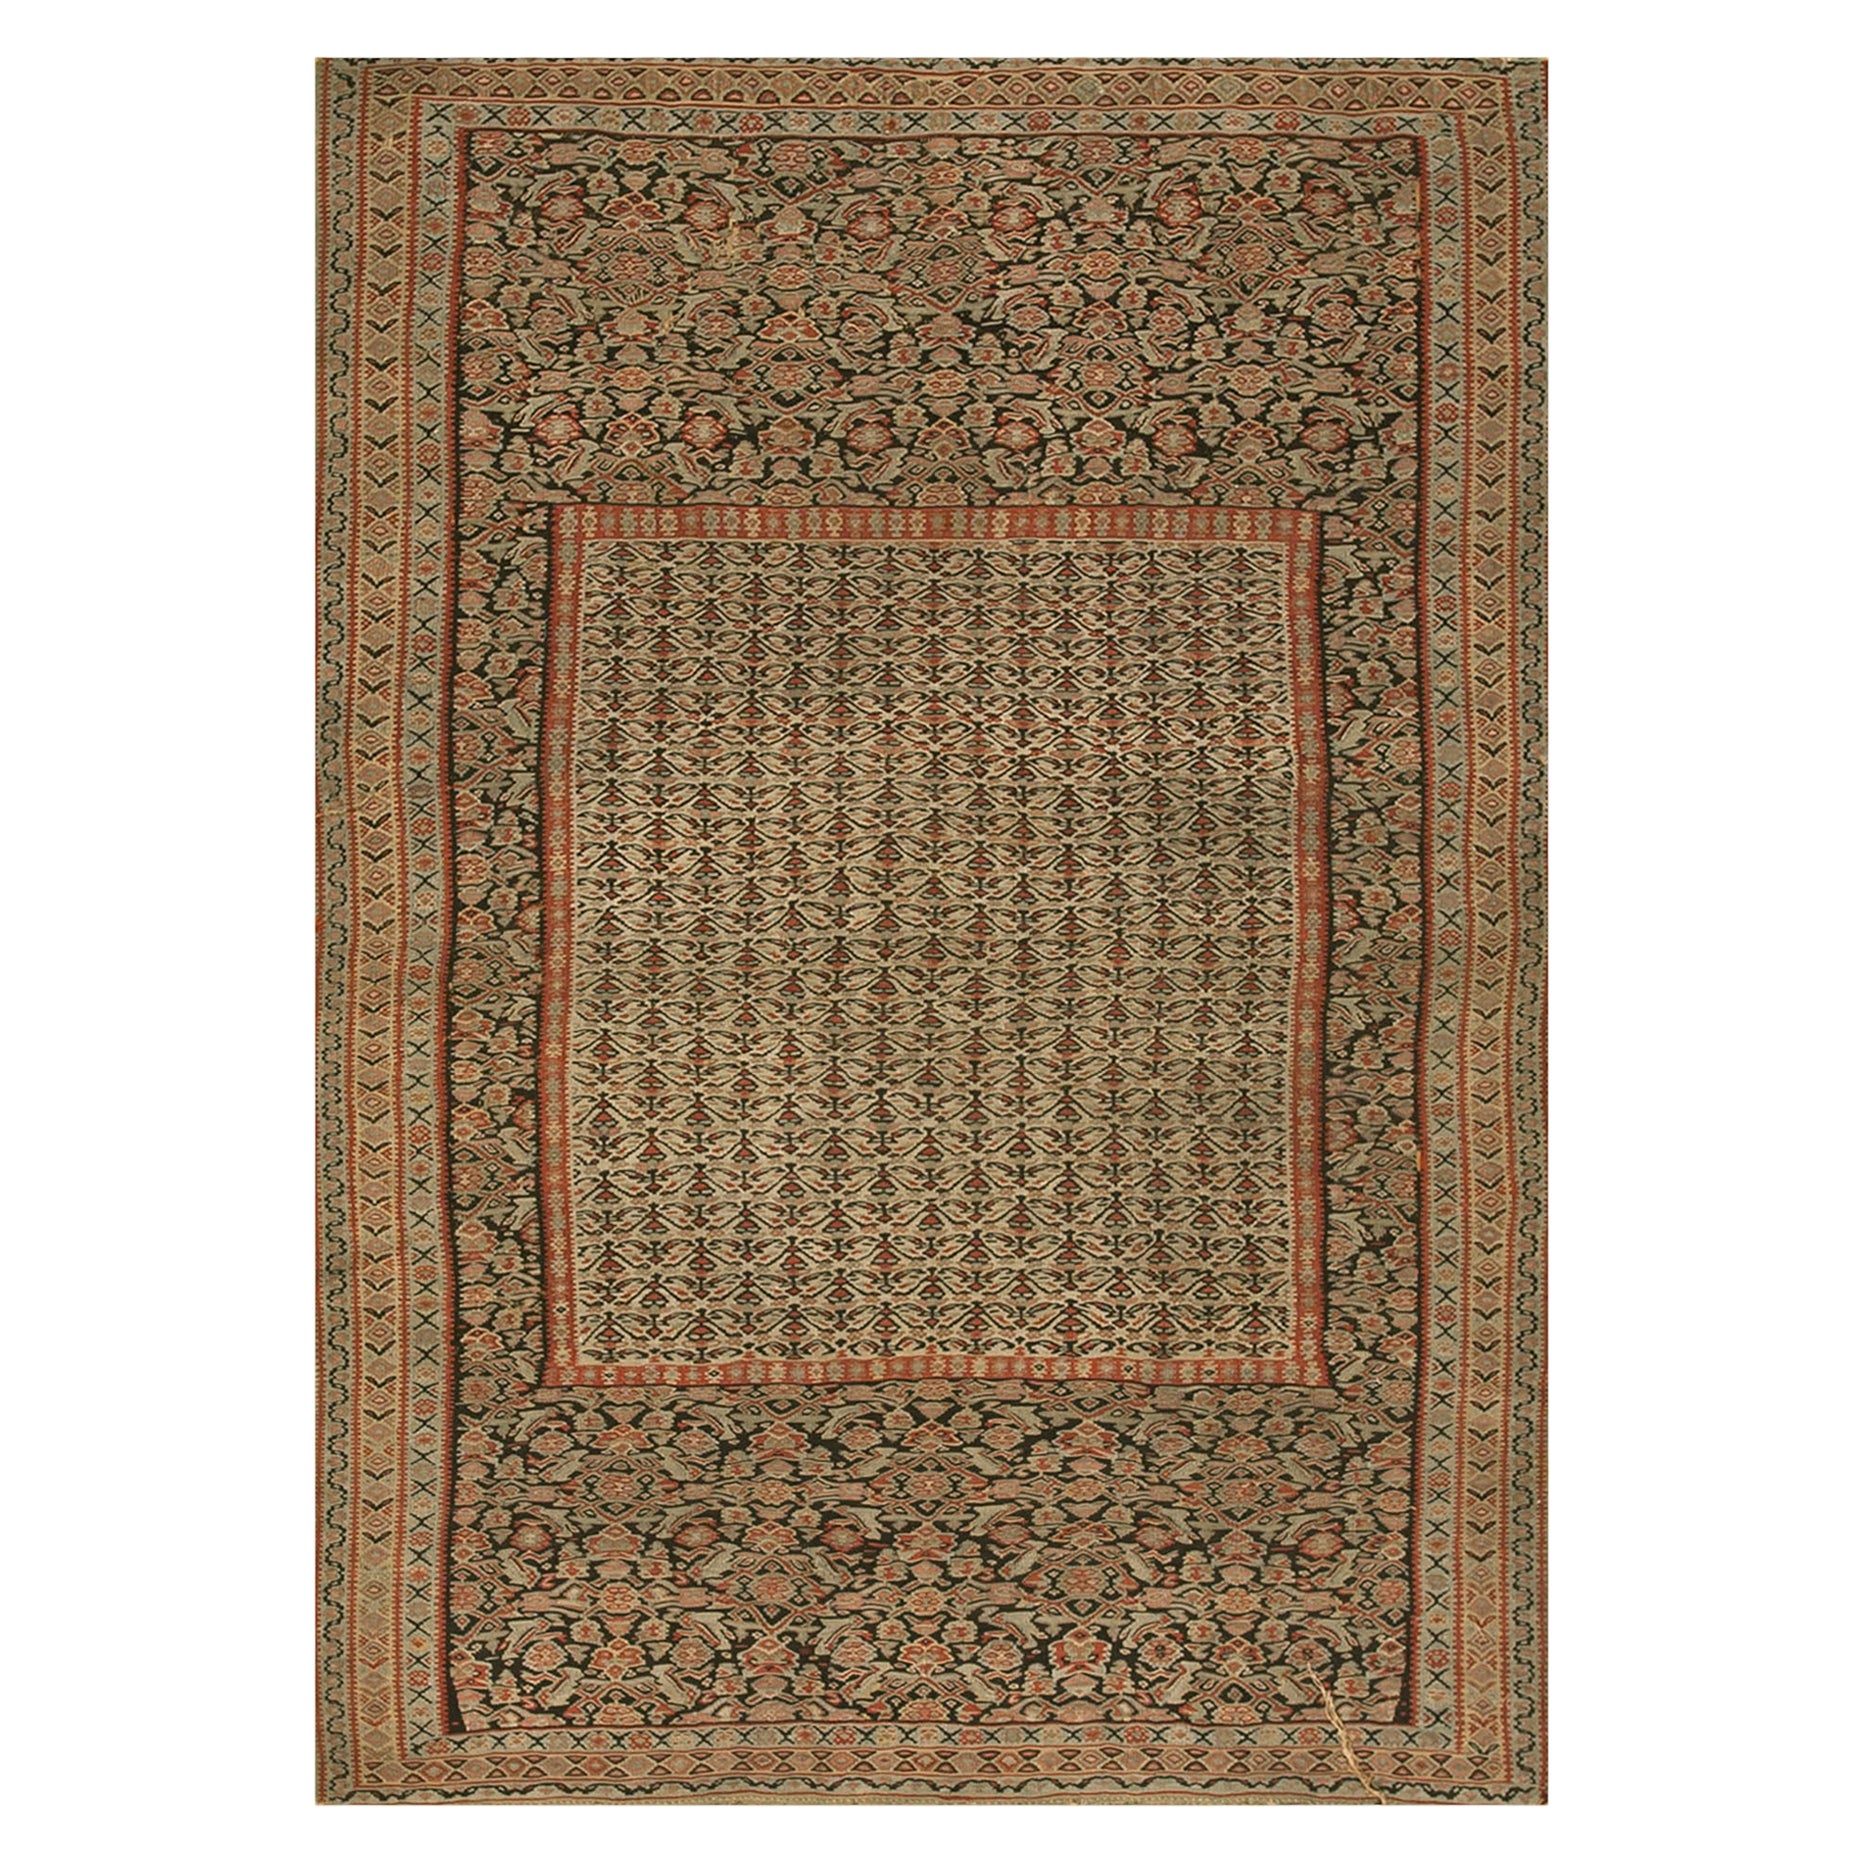 19th Century Persian Senneh Kilim ( 4' 3'' x 6' 3'' - 130 x 190 cm )